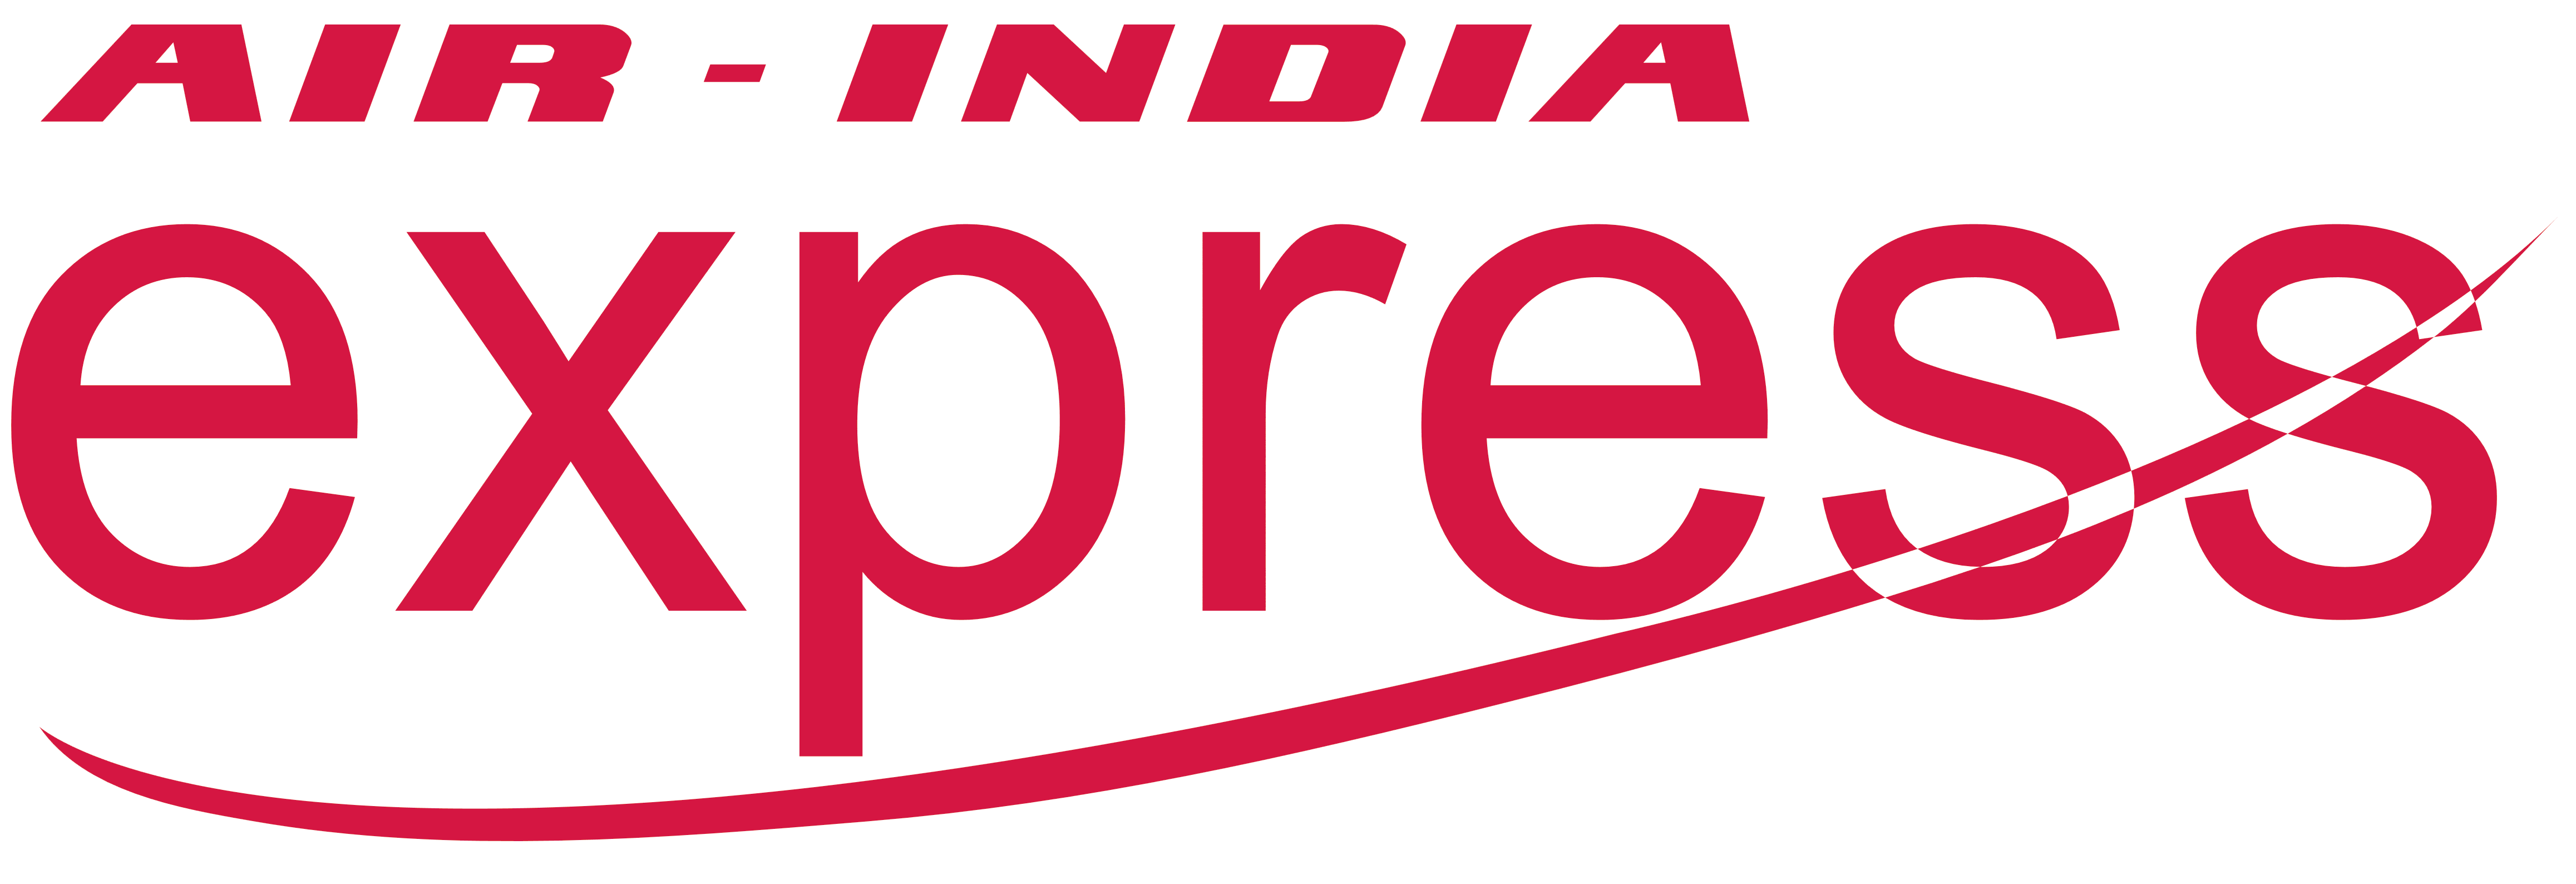 Resultado de imagen para air india logo"